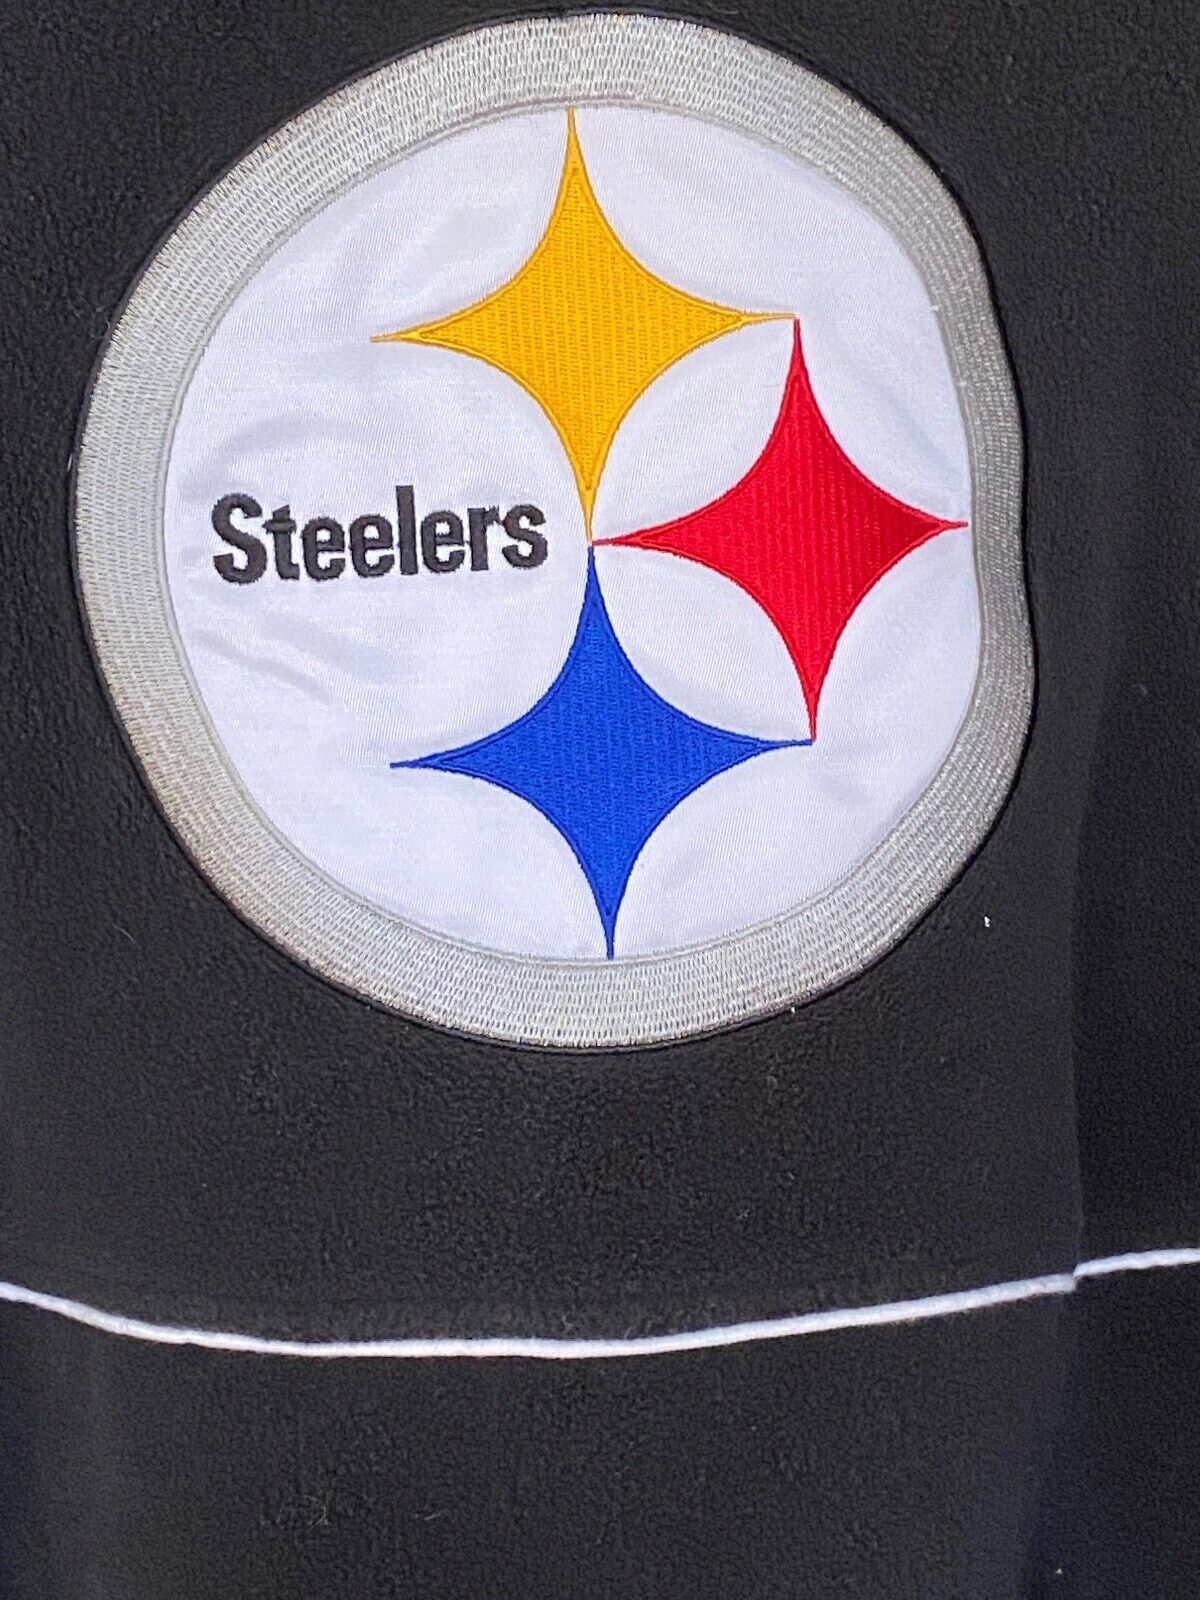 Primary image for Reebok Pittsburgh Steelers Fleece Quarter Zip NFL Pullover Jacket Size XL